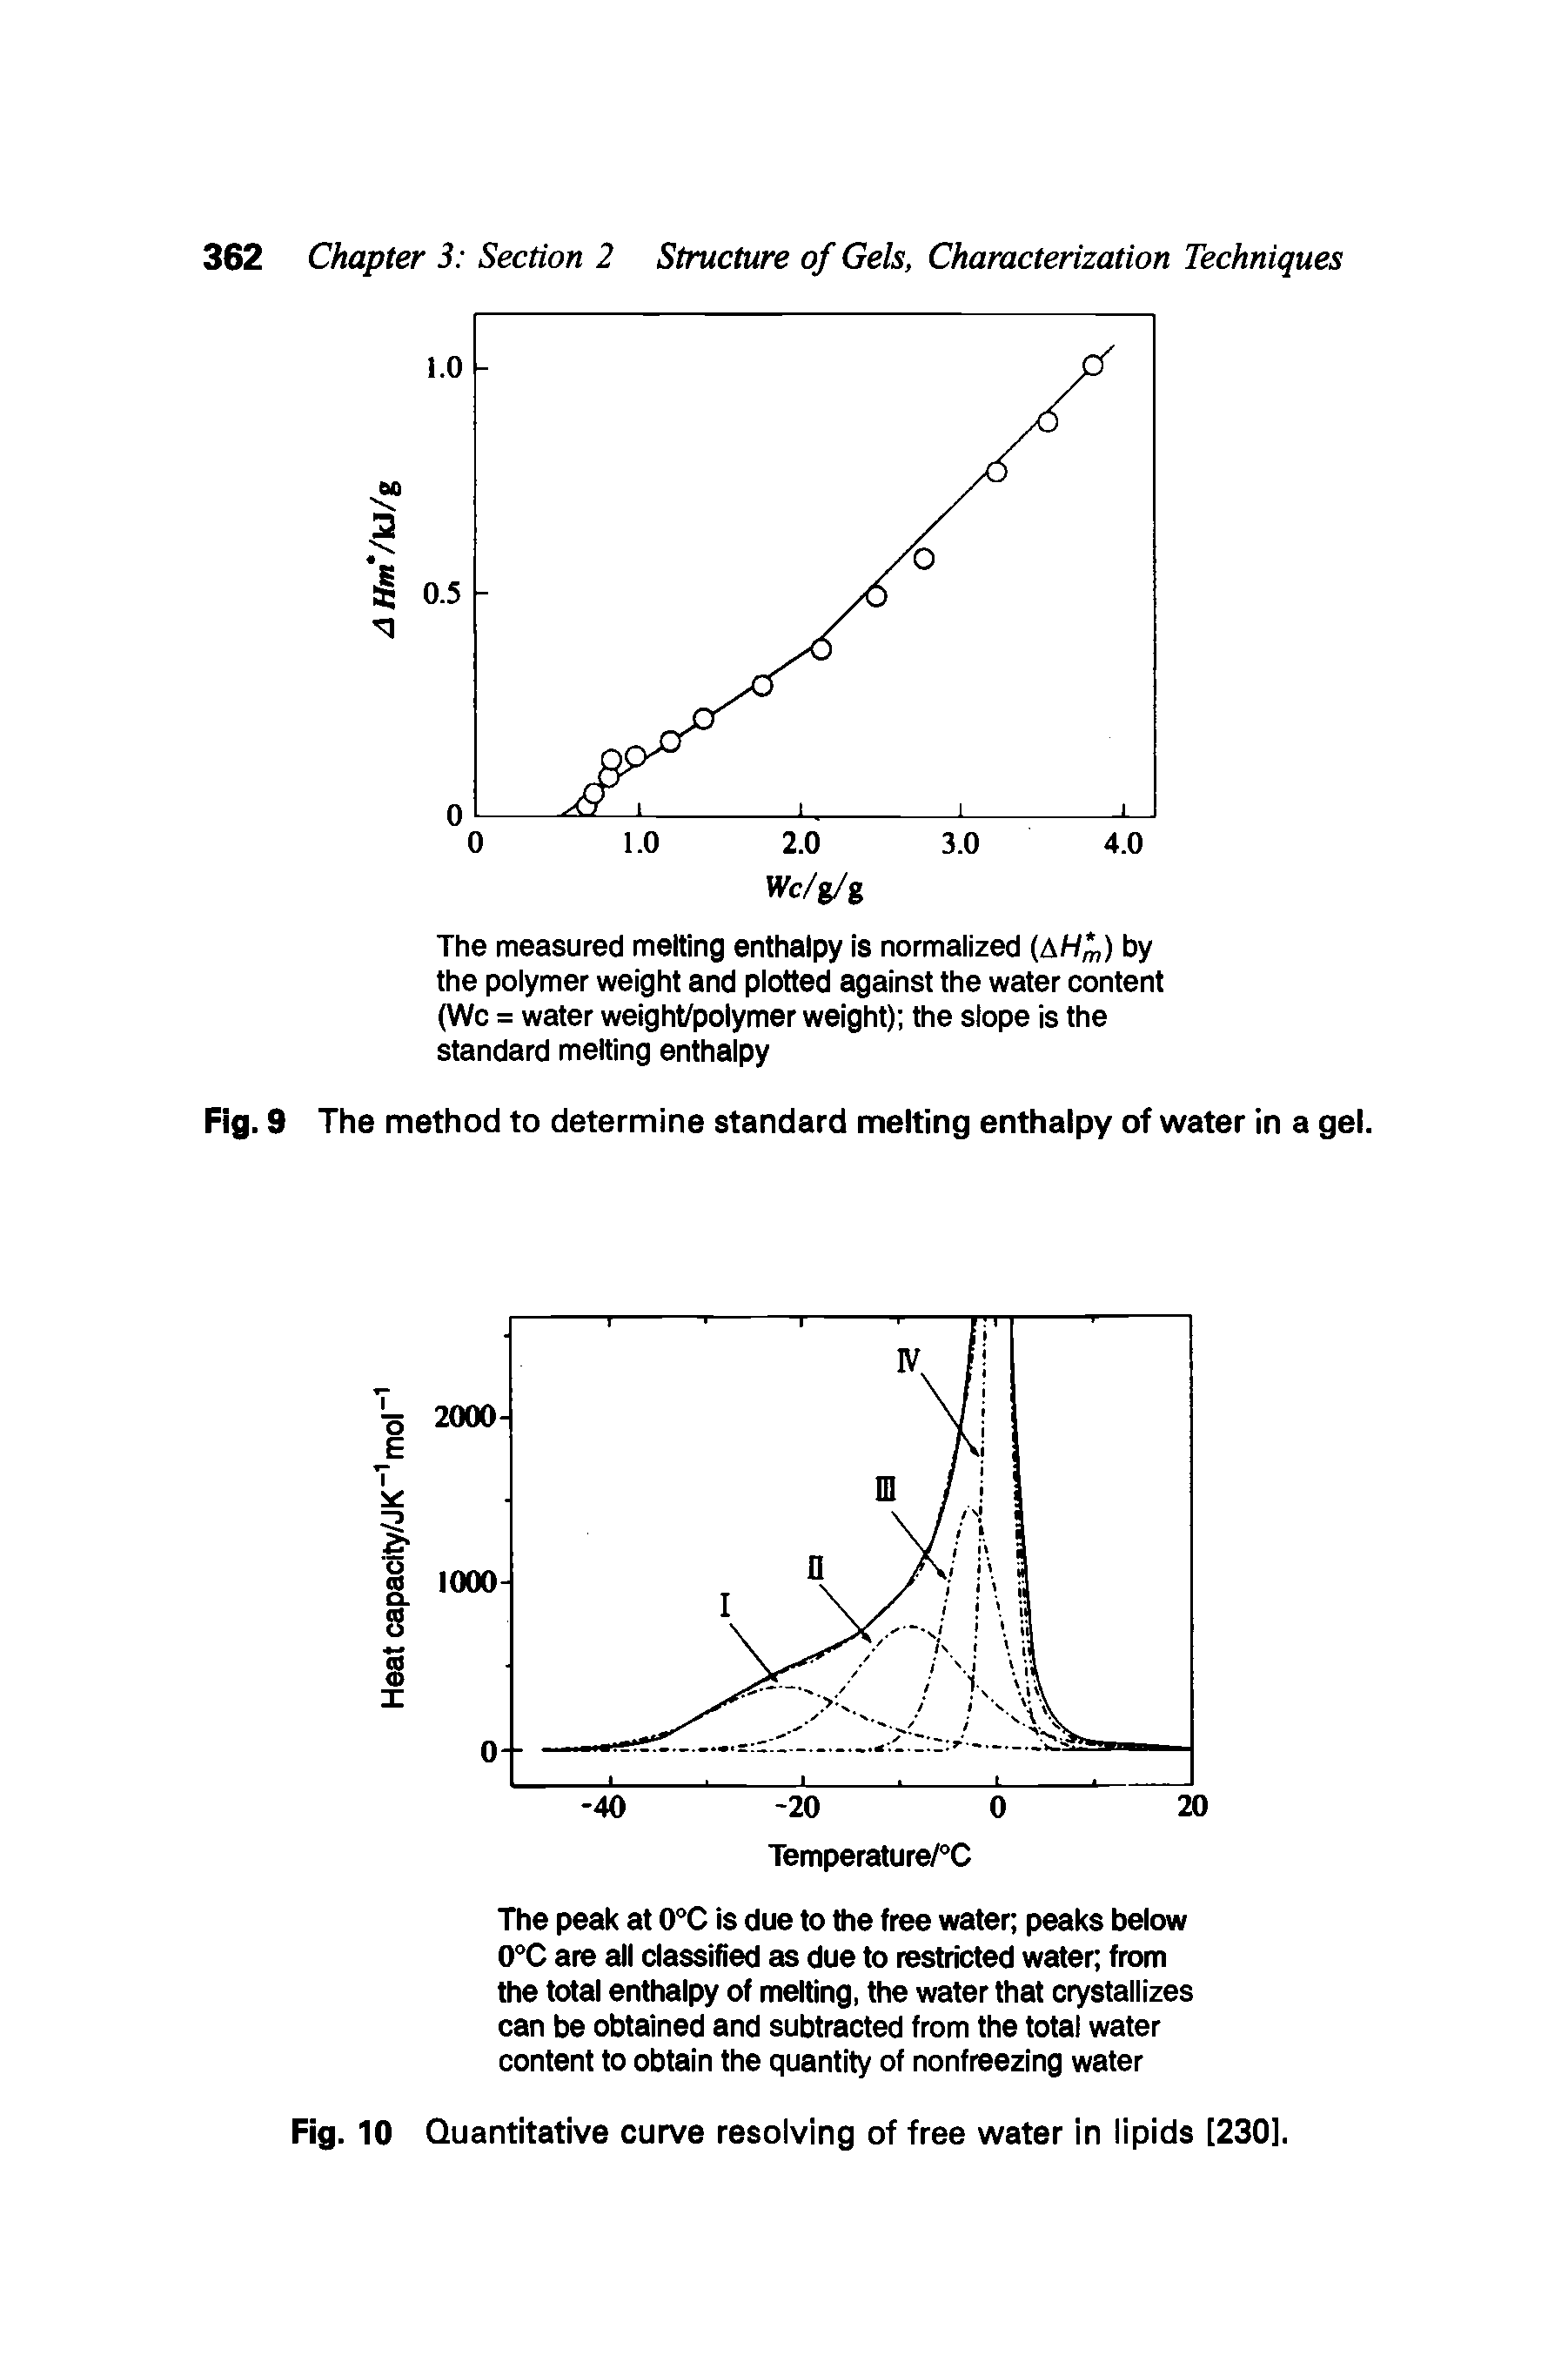 Fig. 10 Quantitative curve resolving of free water in lipids [230].